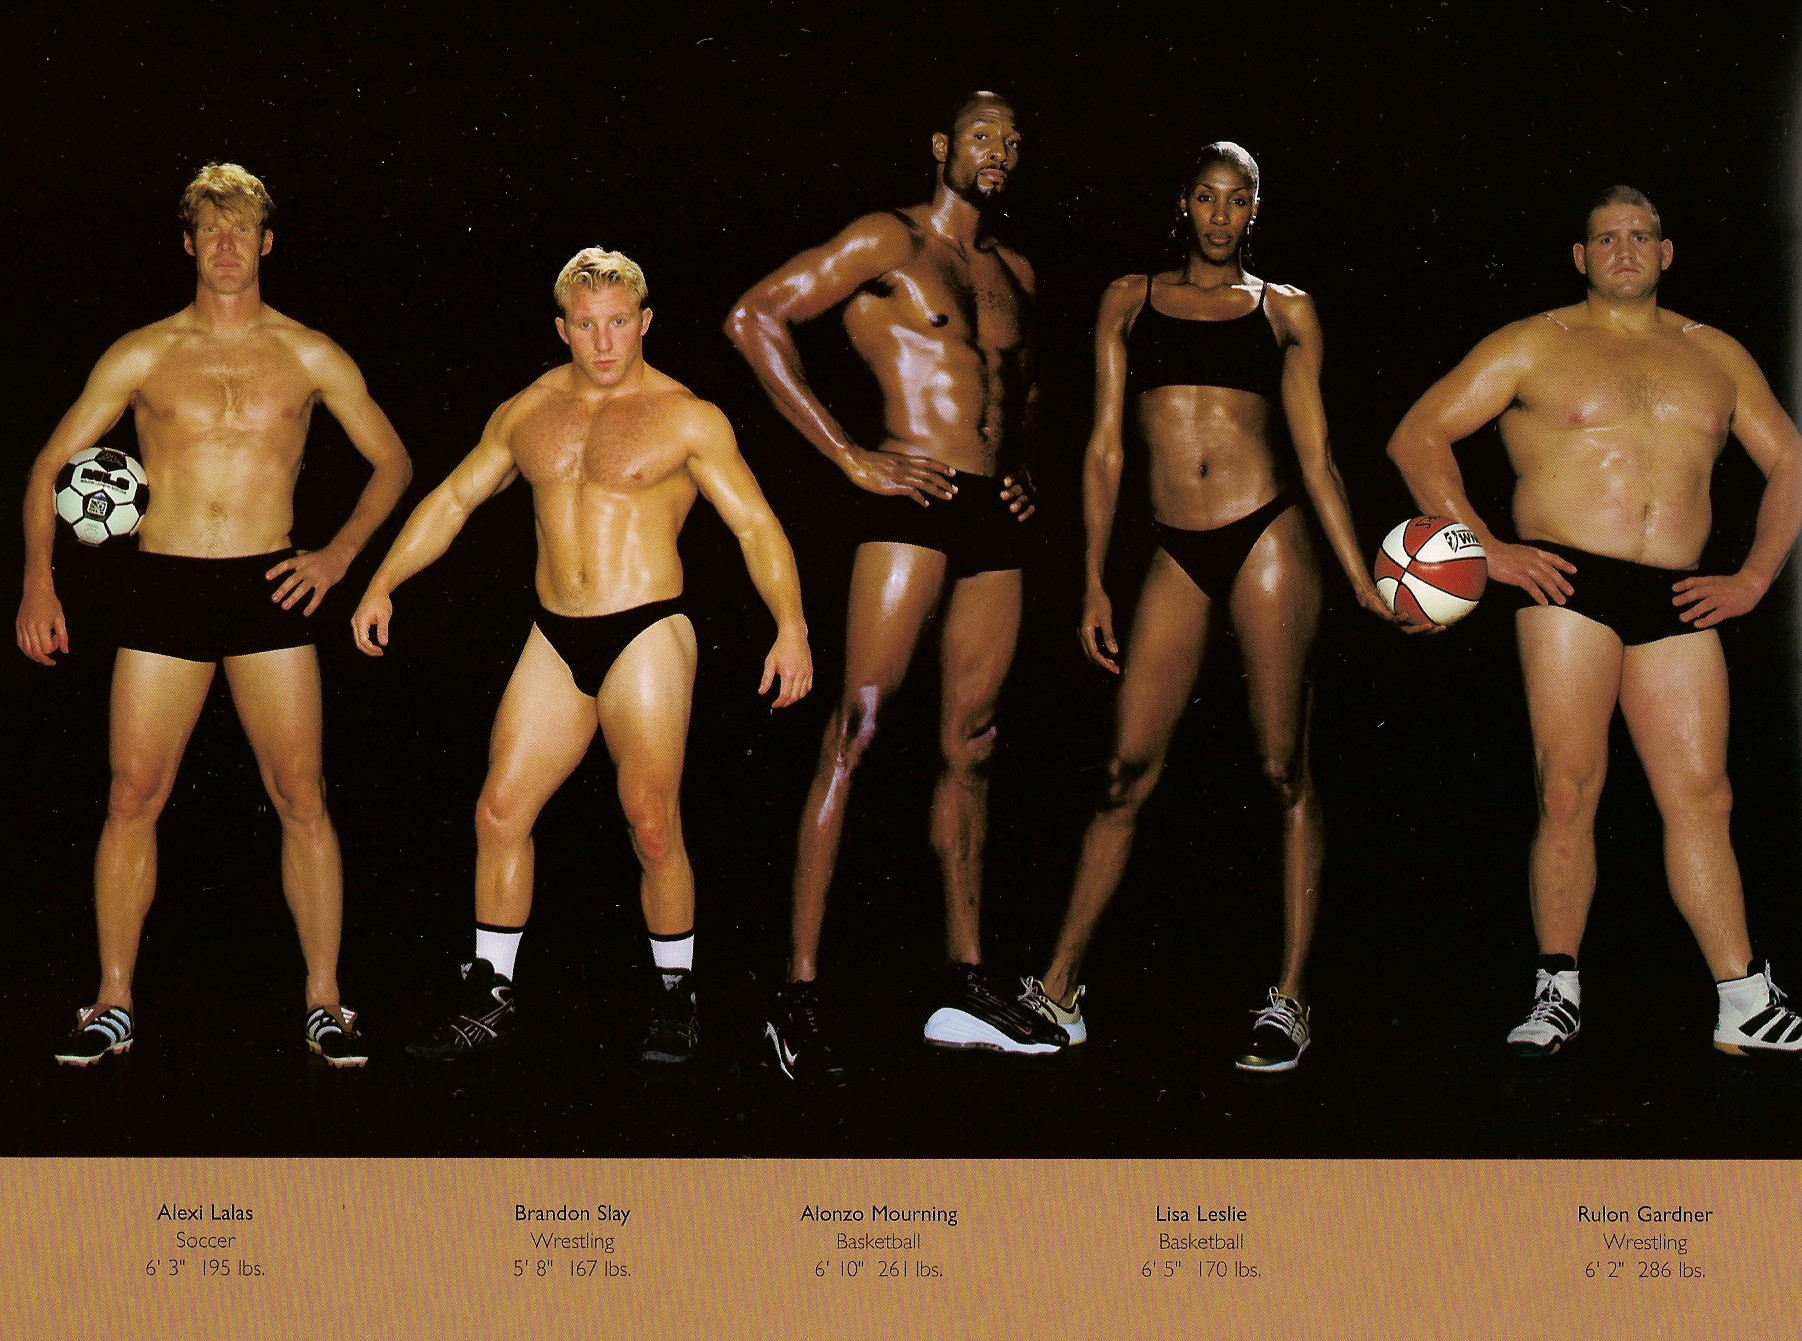 Howard Schatz / слева направо: футбол, реслинг, баскетбол, тоже баскетбол, реслинг.